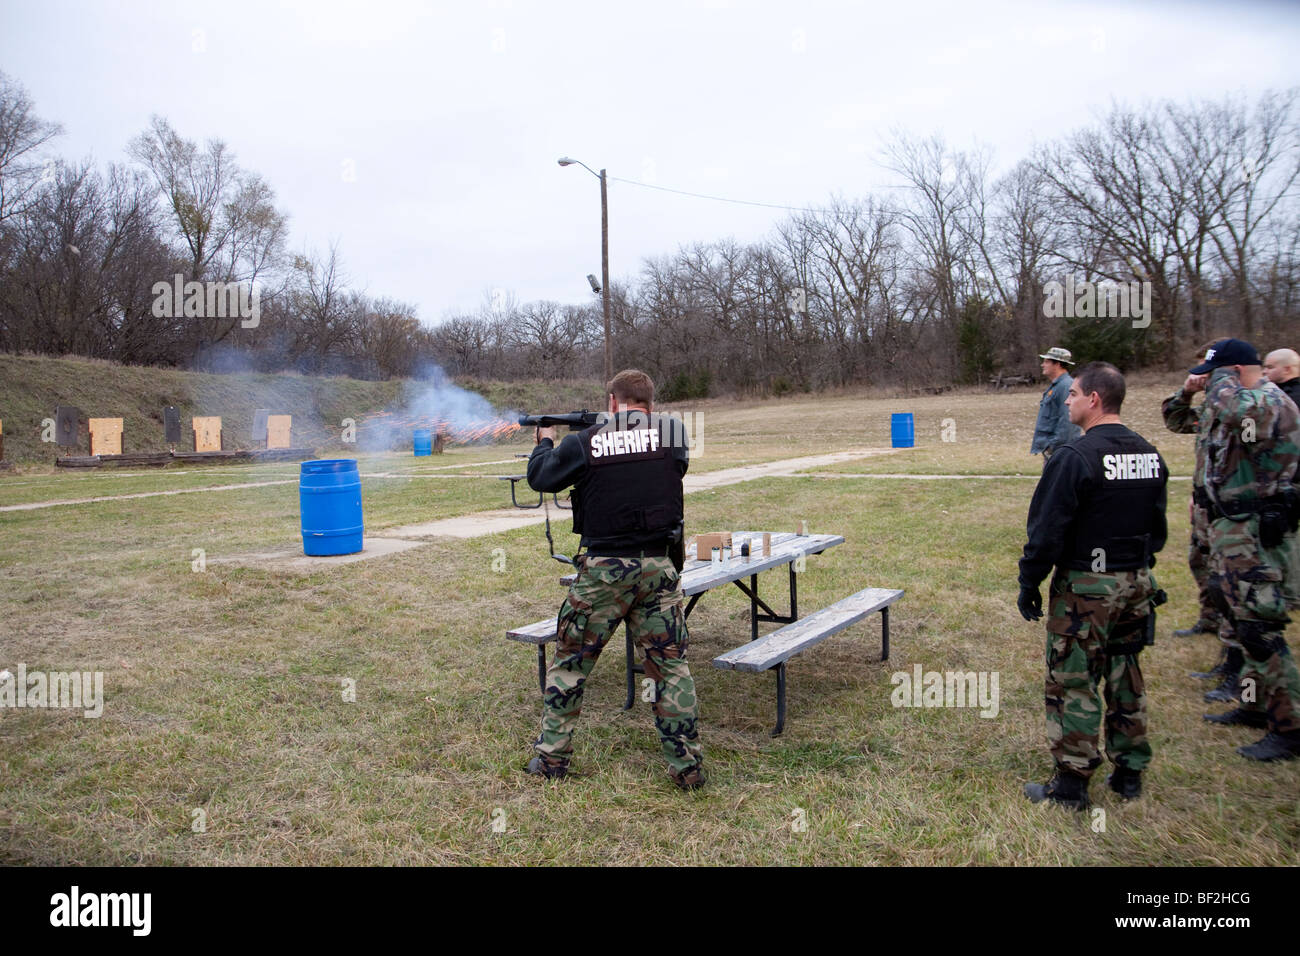 Deputy sheriffs using gas munitions on shooting range. Stock Photo